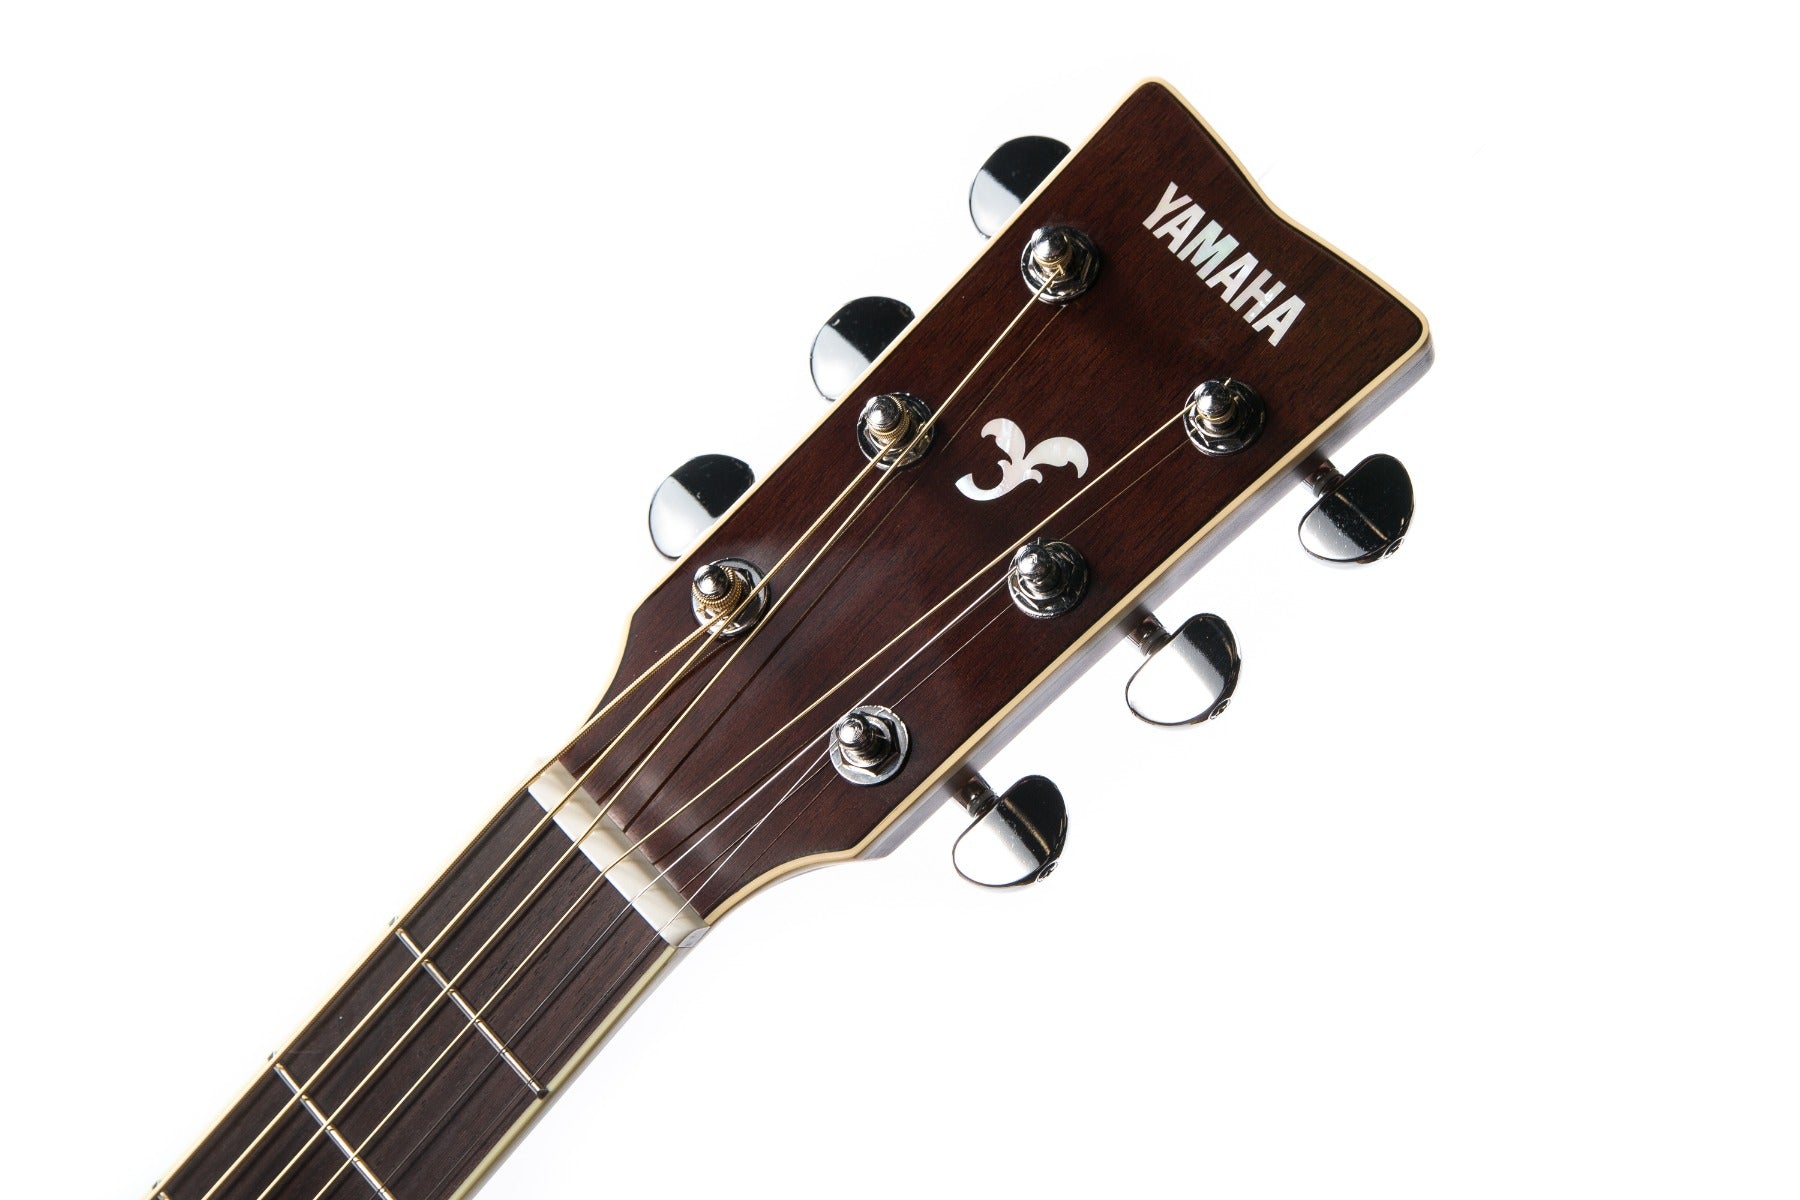 Yamaha FSX830C Acoustic-Electric Guitar - Brown Sunburst